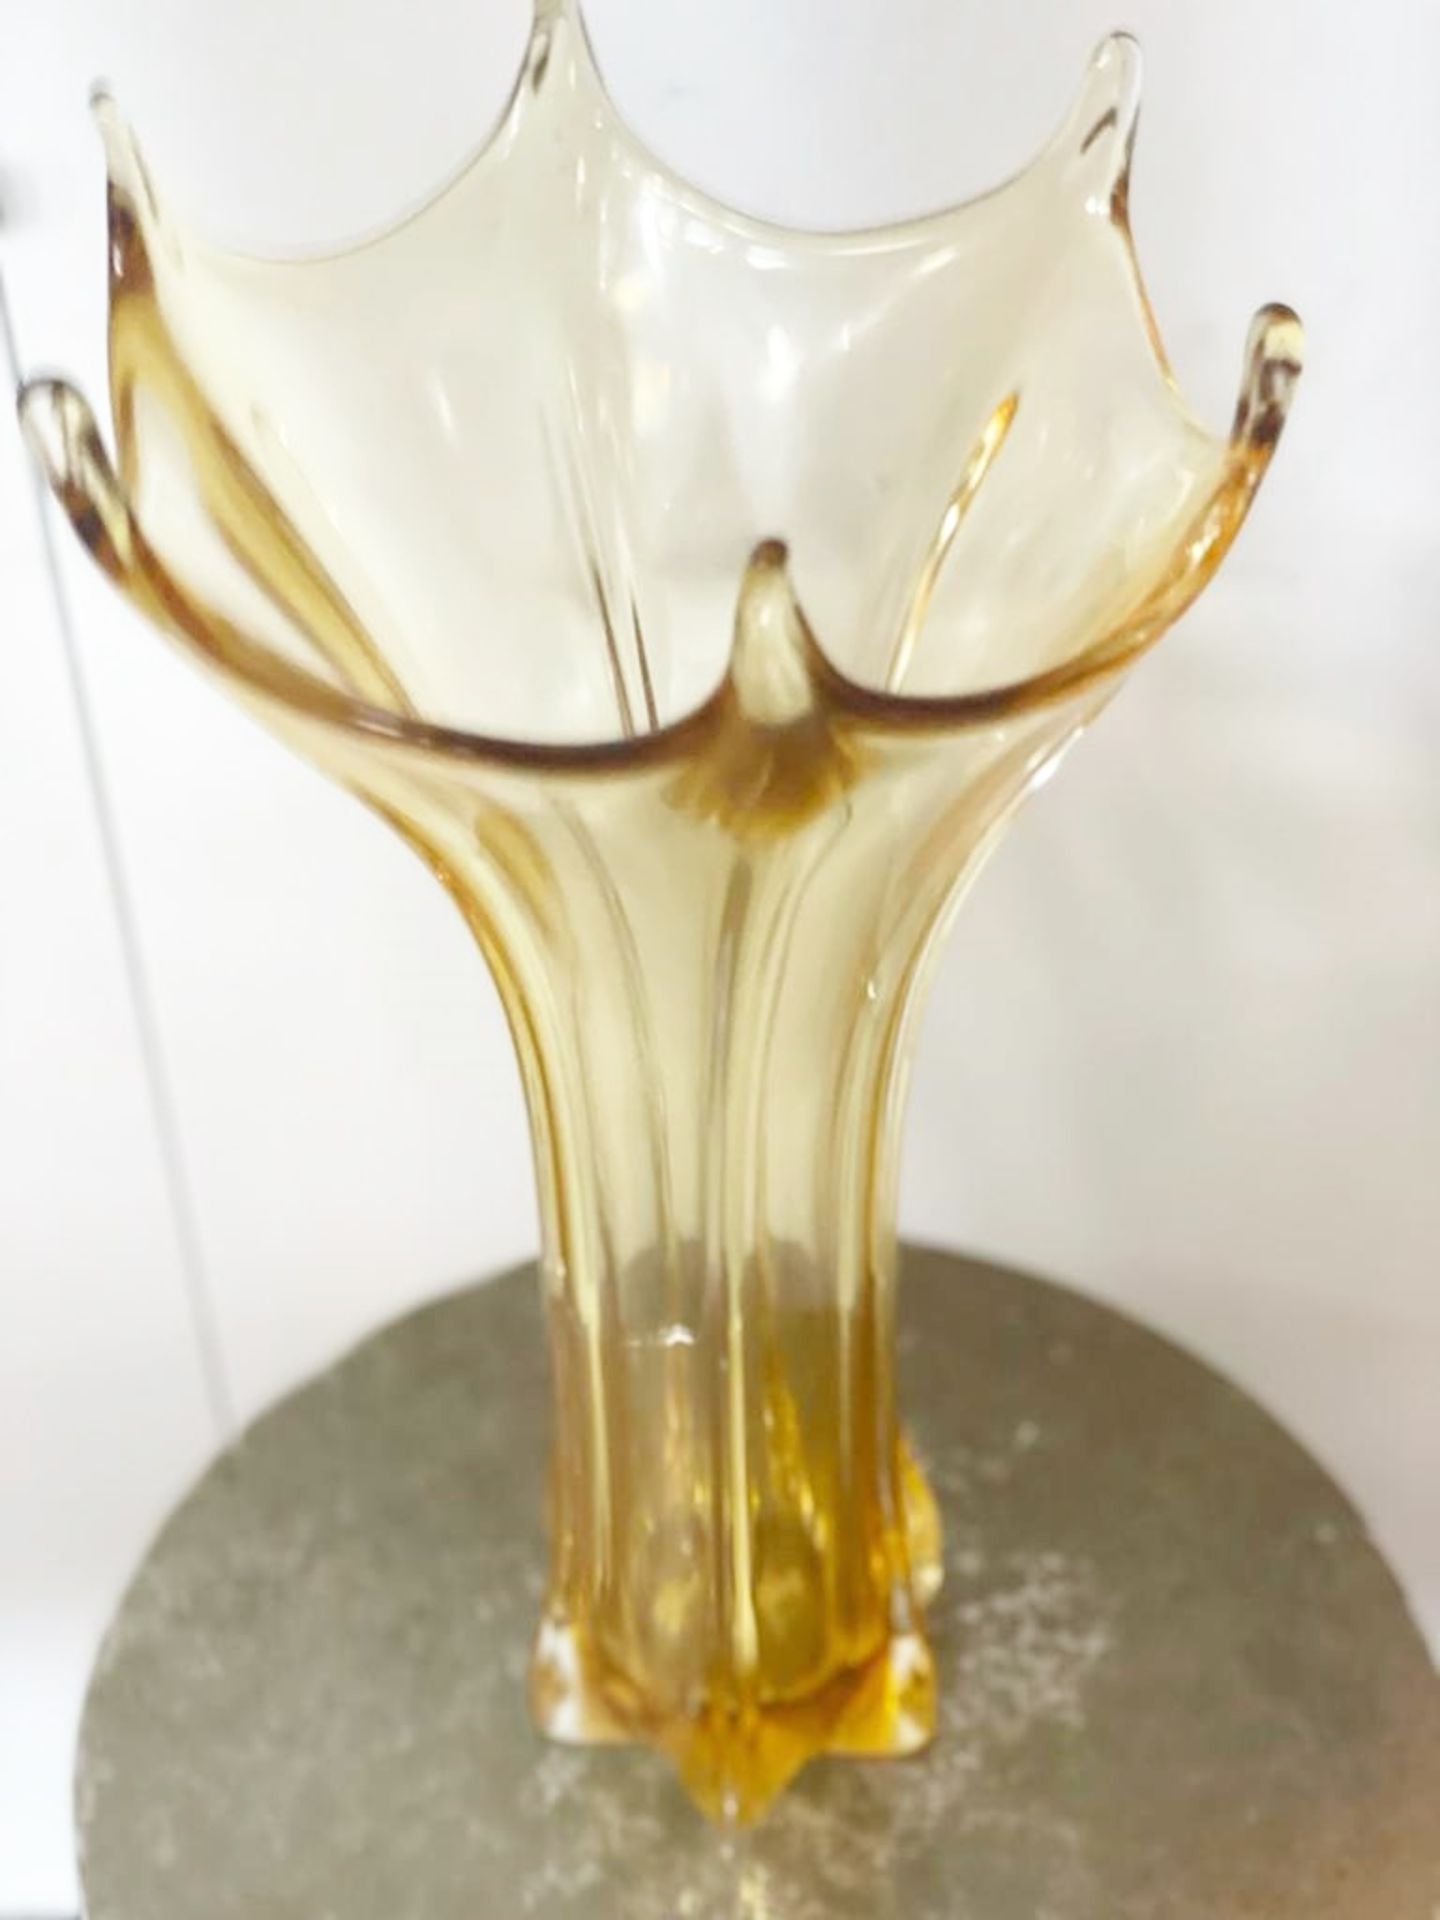 1 x Tall Tinted Yellow Glass Vase - Ref: AUR158  - CL652 - Location: Altrincham WA14 Dimensions: